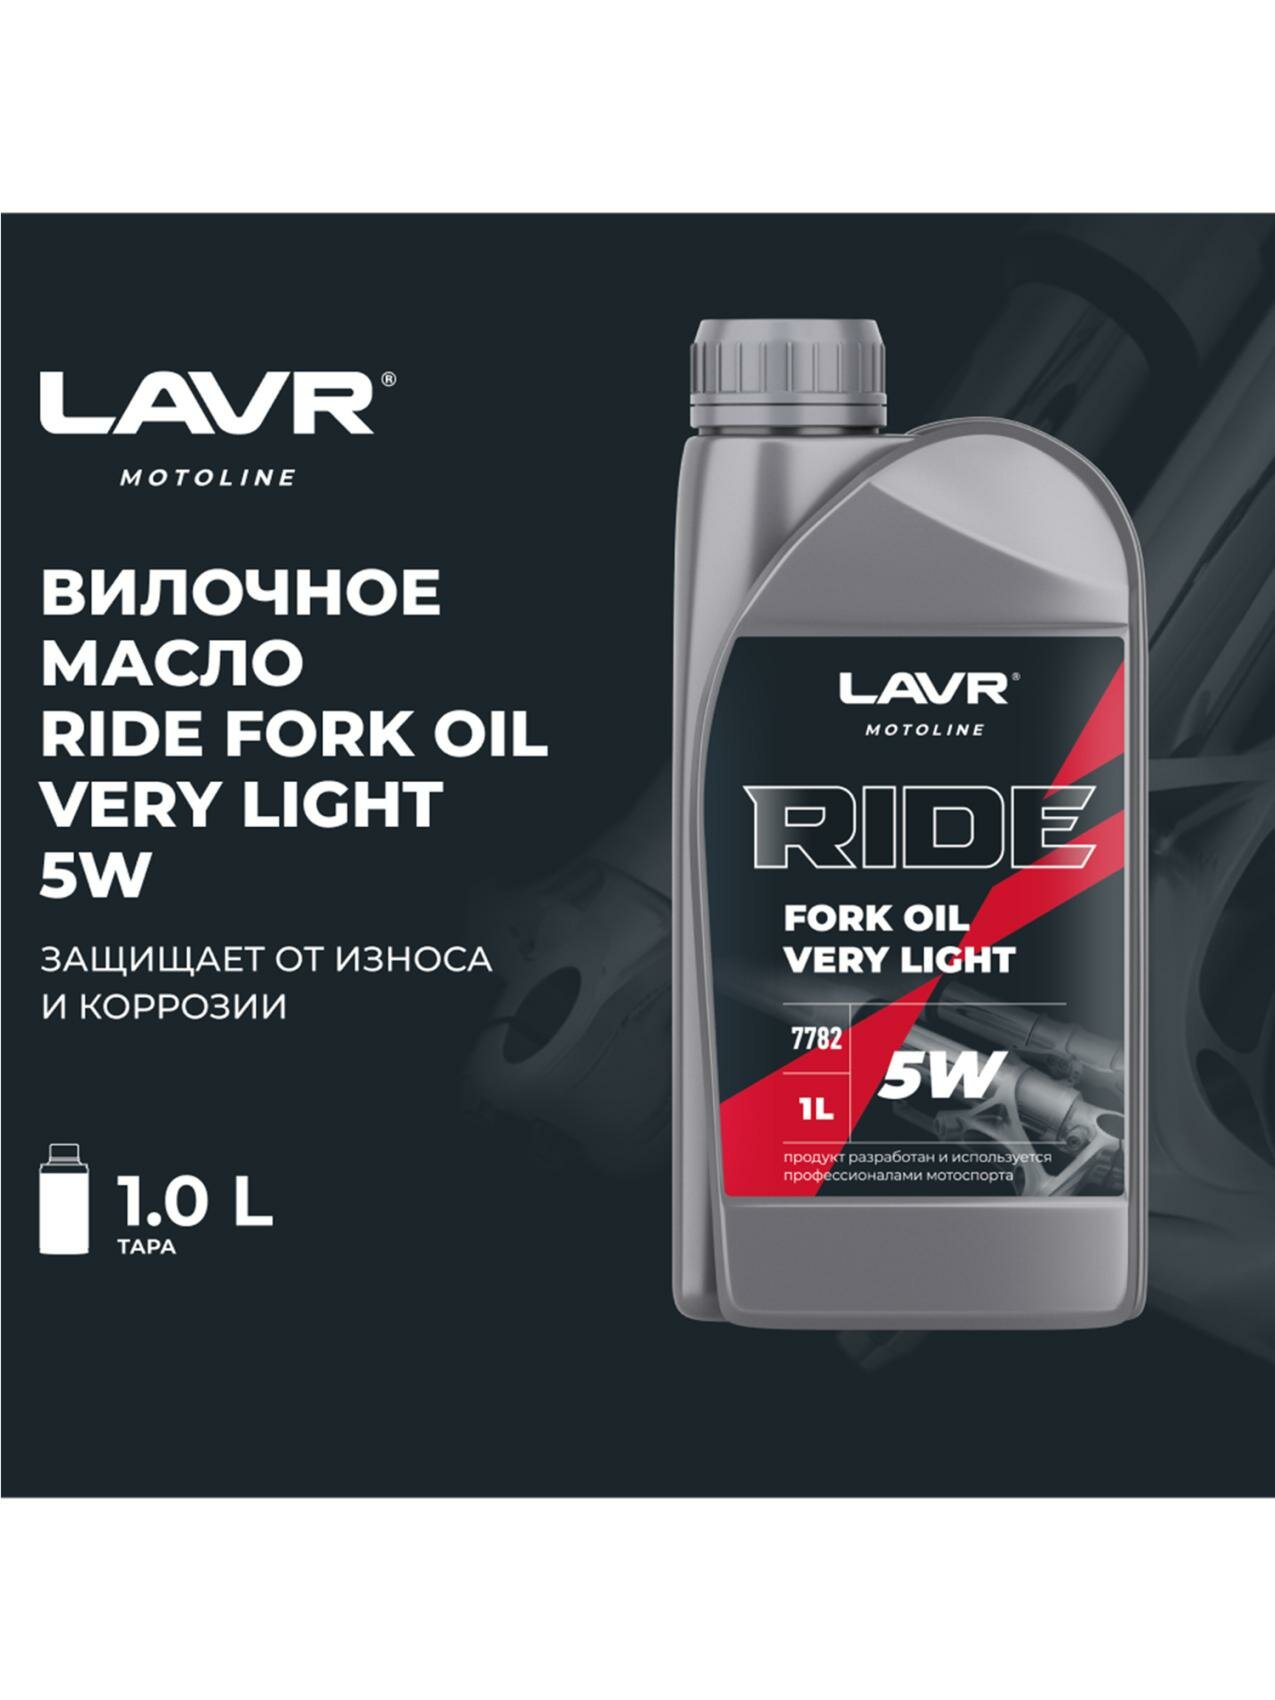 Вилочное масло RIDE Fork oil 5W 1 л. LAVR